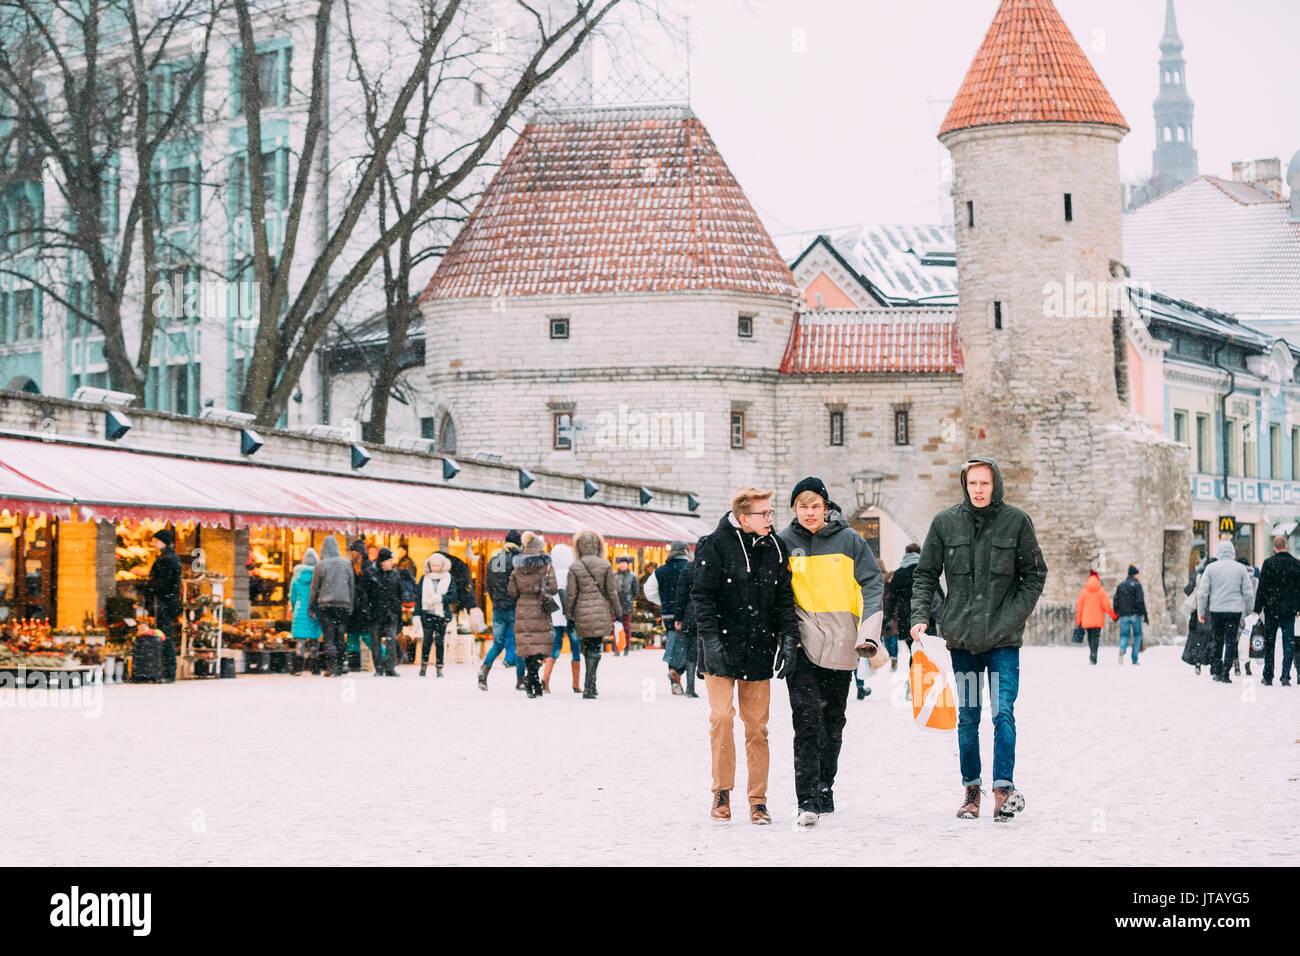 Tallinn, Estonia - December 3, 2016: Young People Walking Near Christmas Xmas Market On Background Of Viru Gate In Winter Snowy Day. Stock Photo